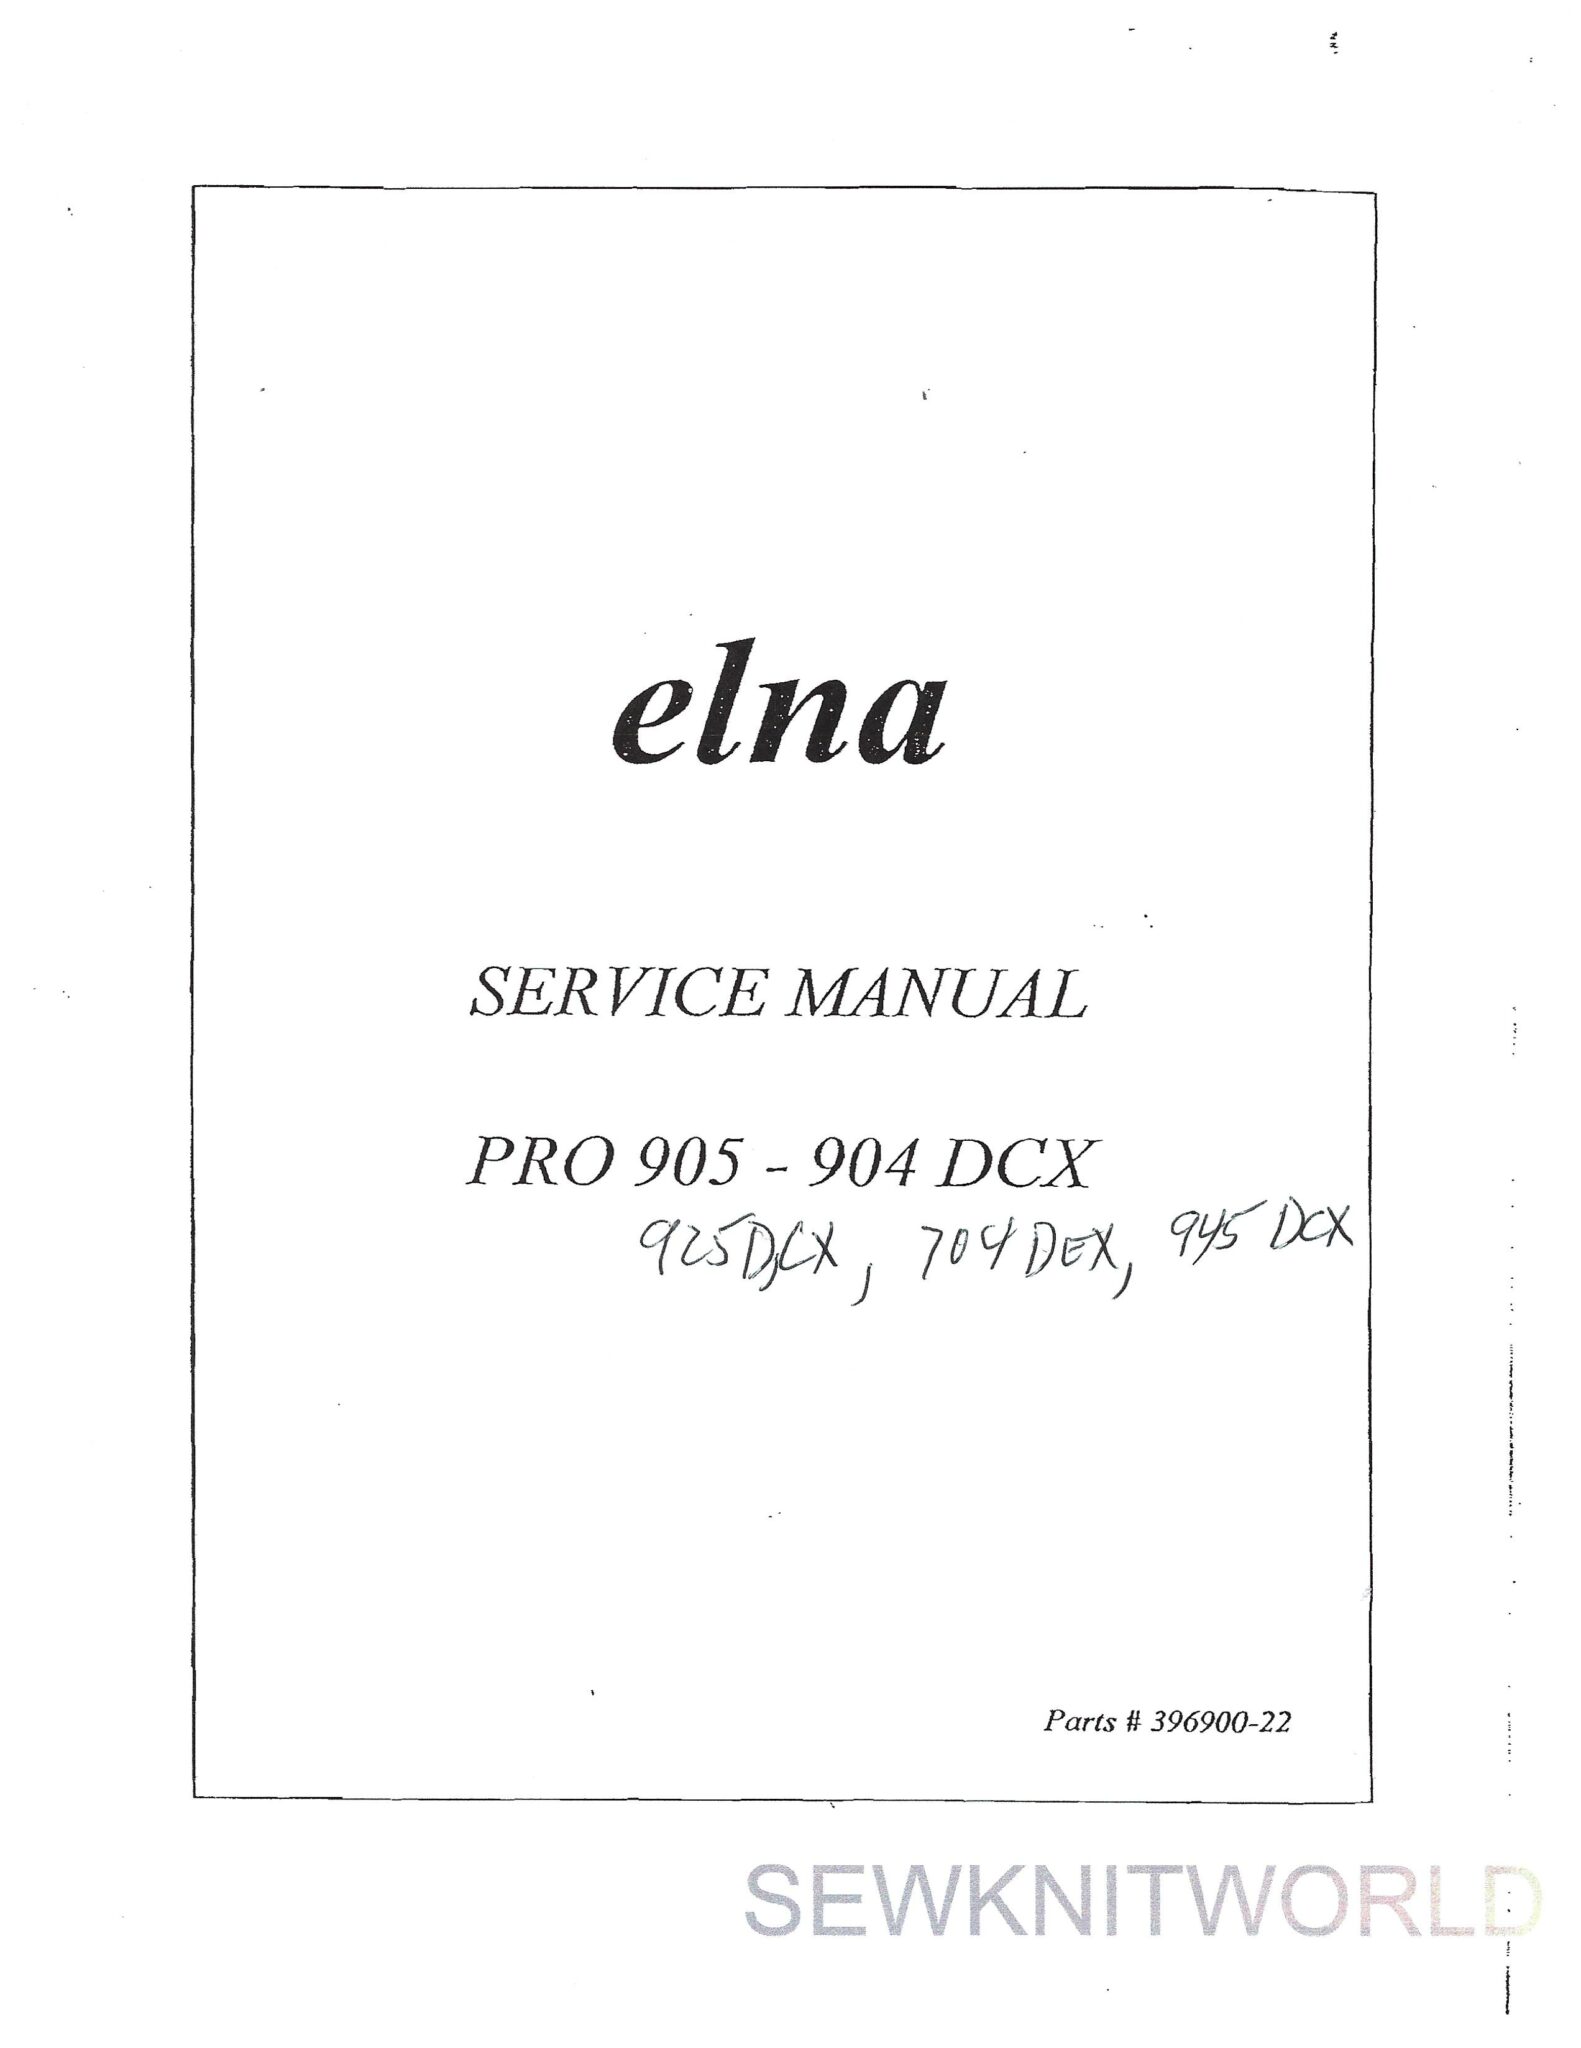 Elna pro 905 dcx service manual free